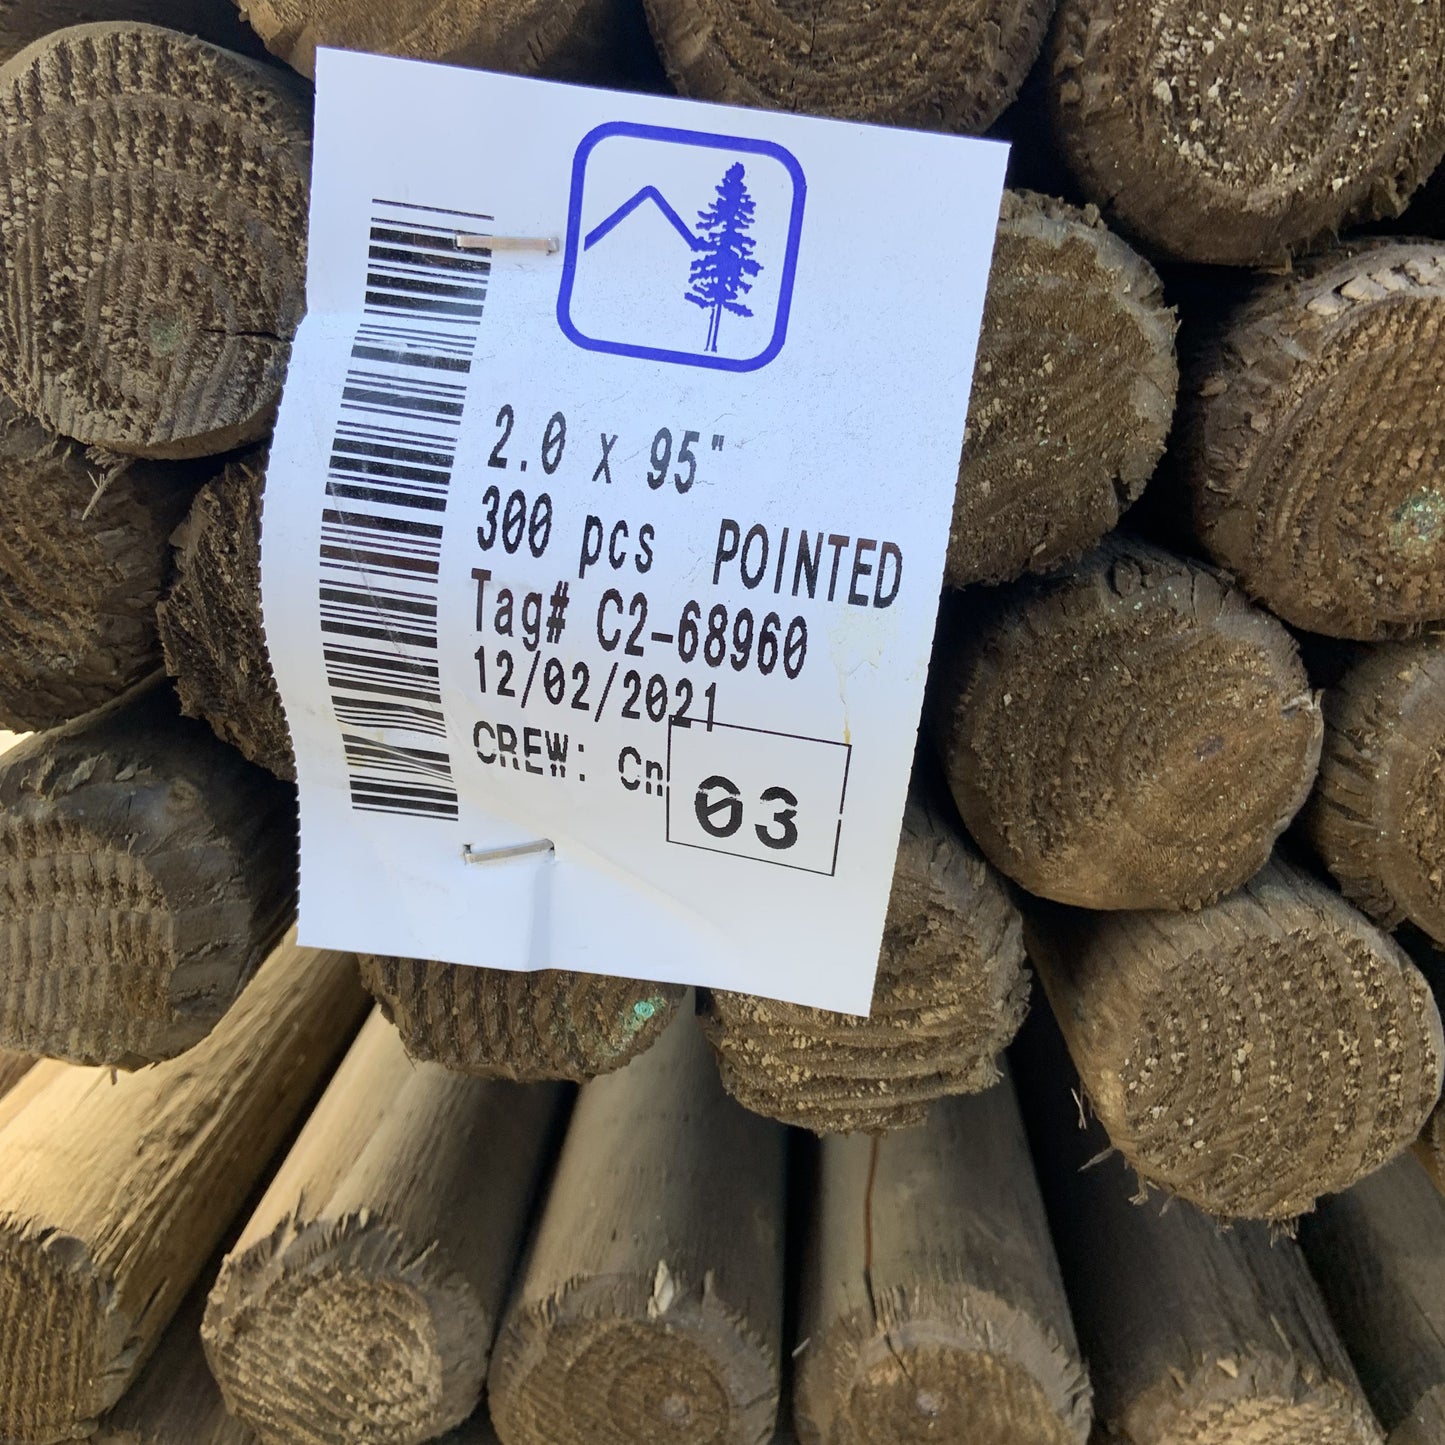 Pressure Treated Wooden Tree Stake, 2" x 95"